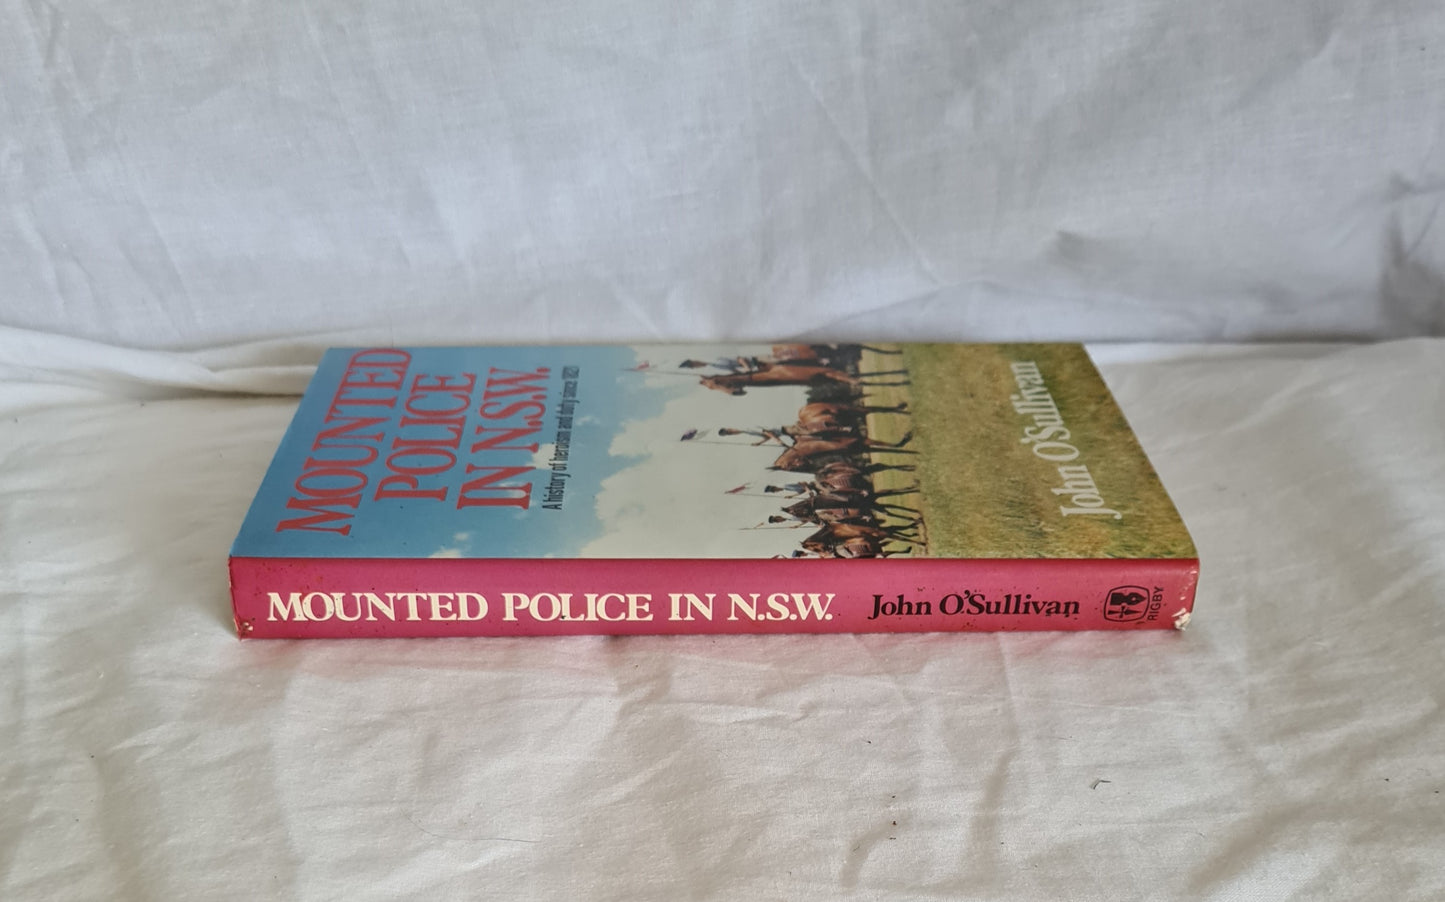 Mounted Police in N.S.W. by John O’Sullivan